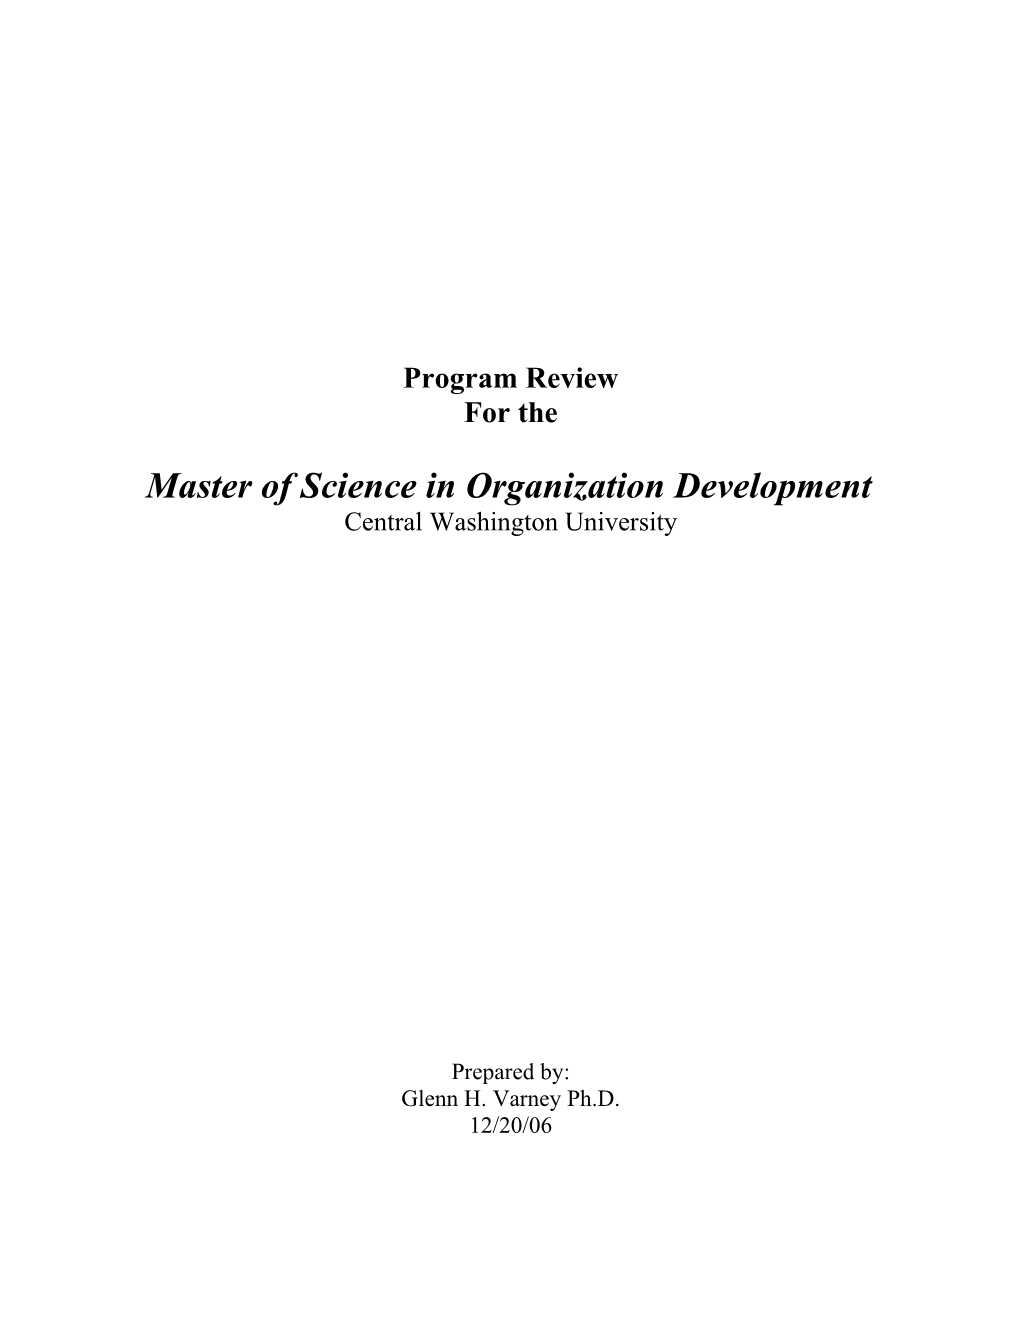 Master of Science in Organization Development